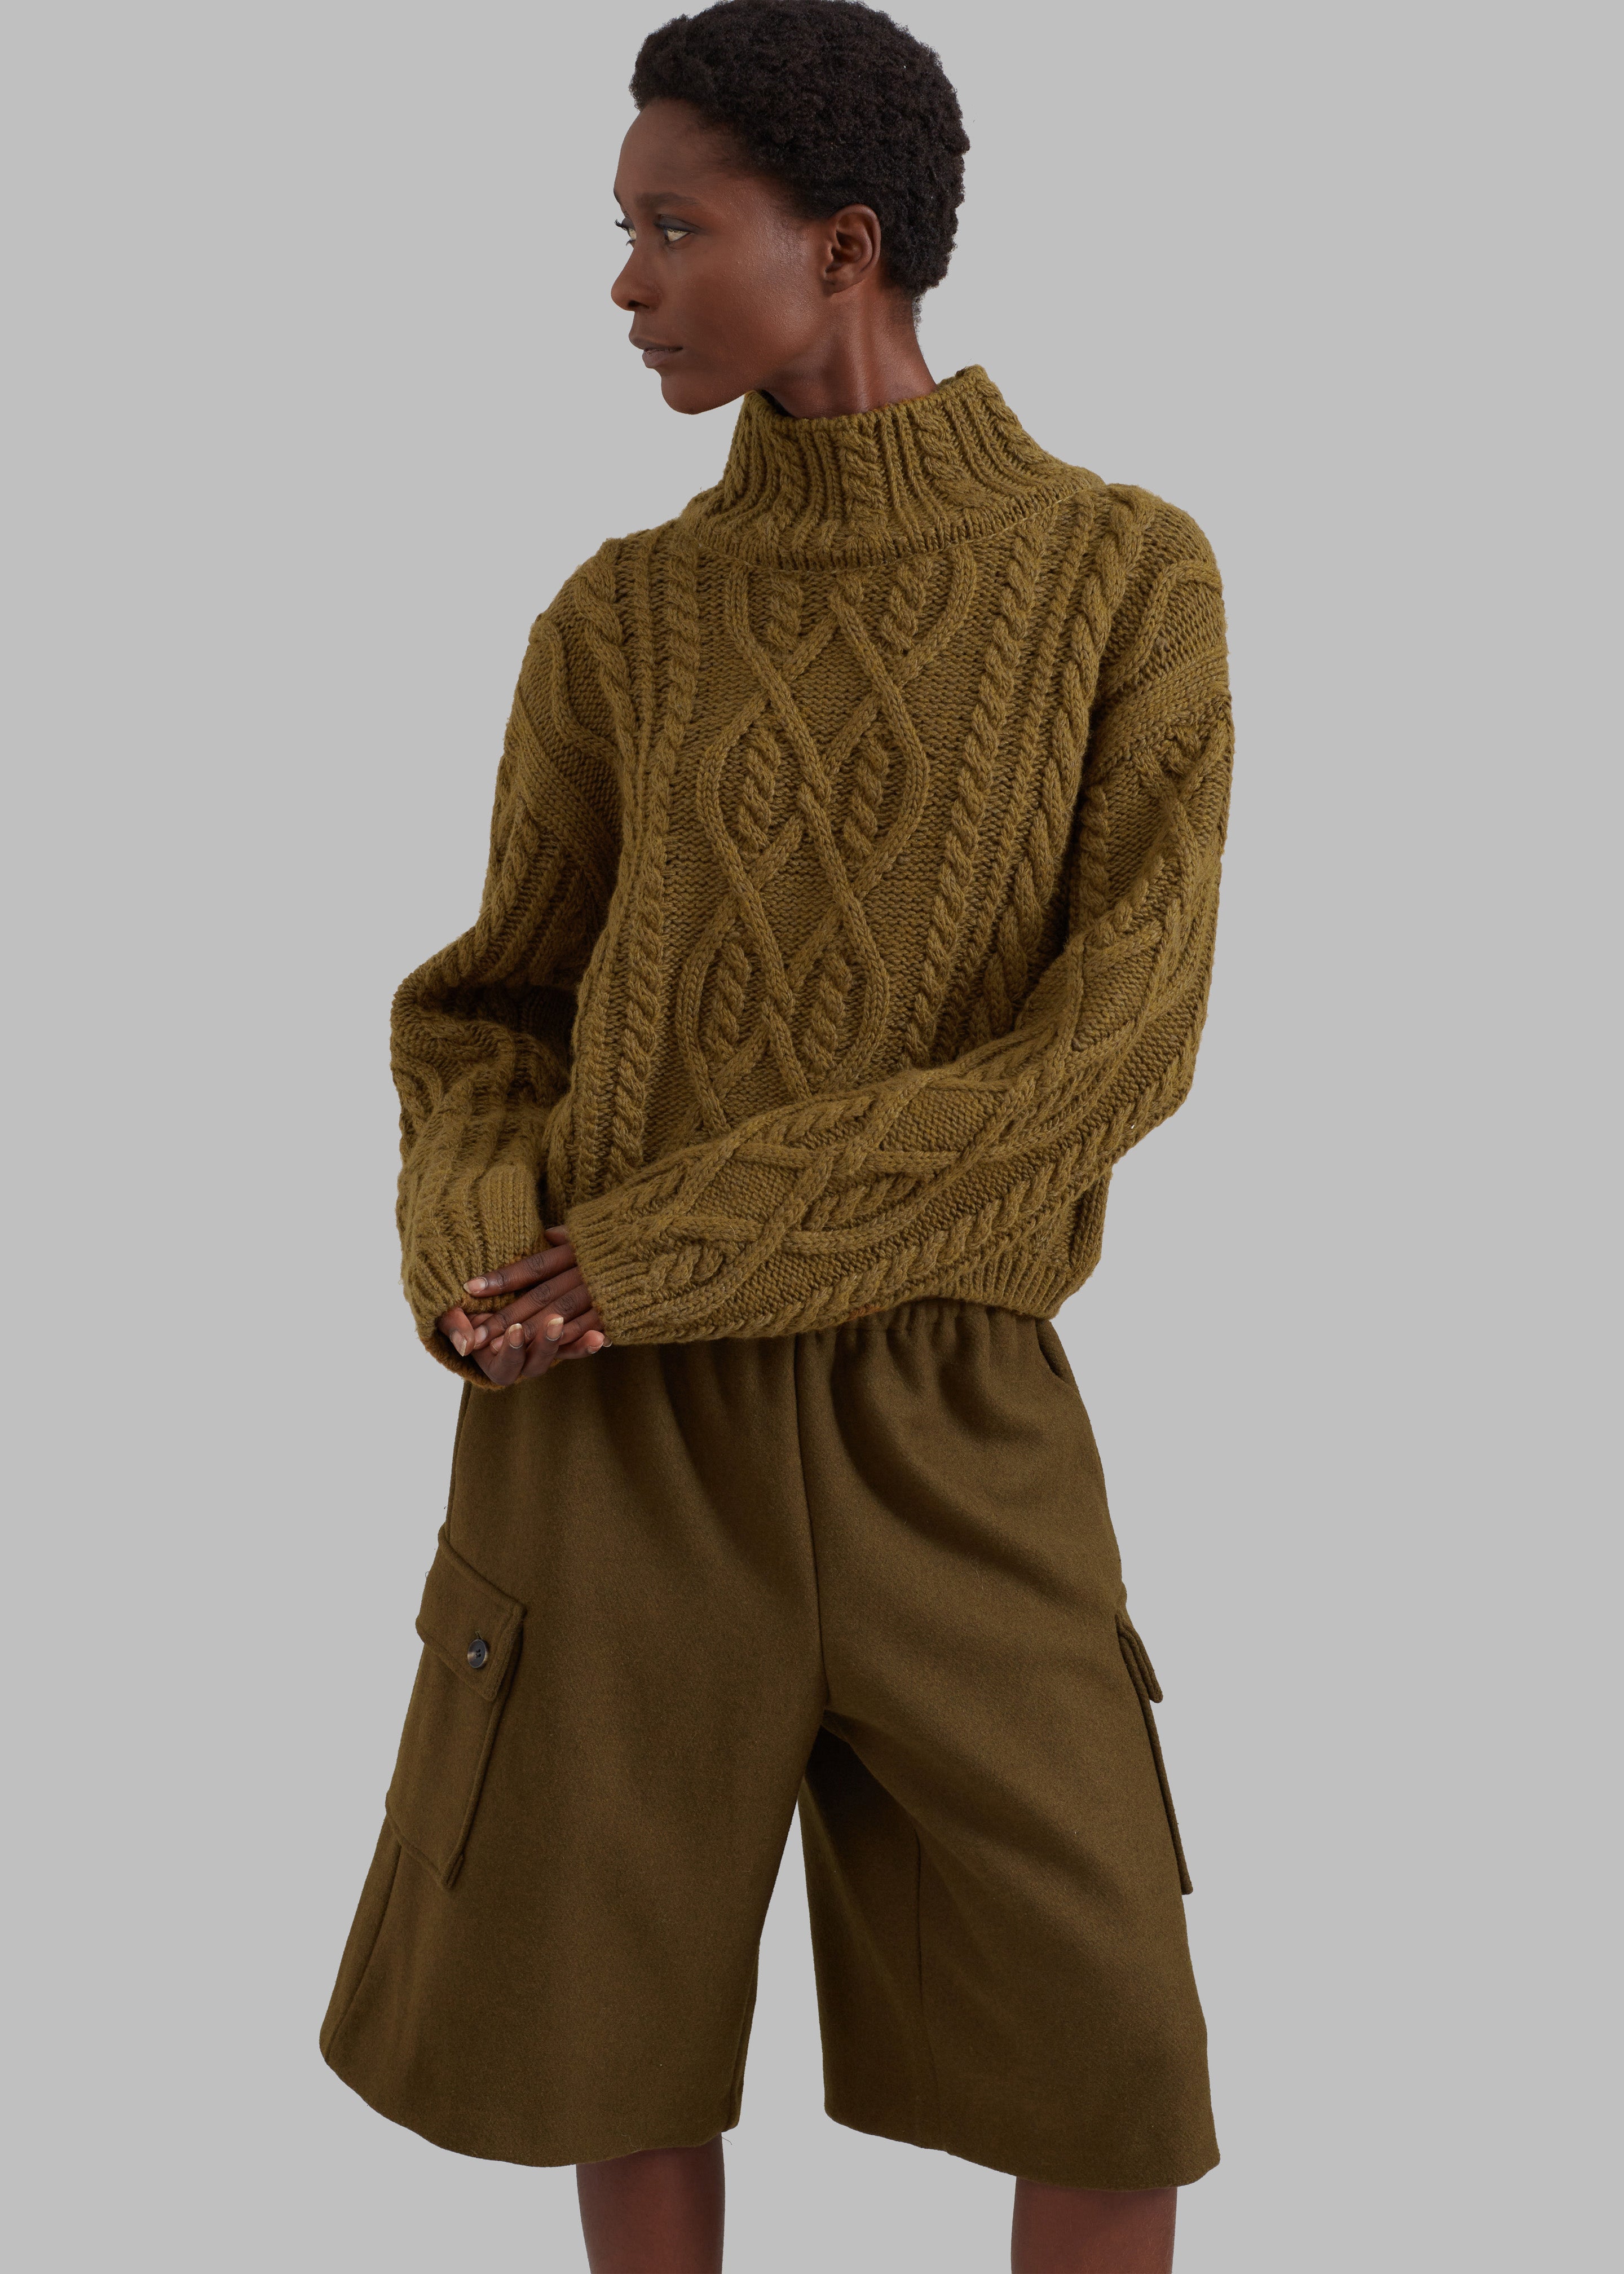 Women's Sweaters – The Frankie Shop